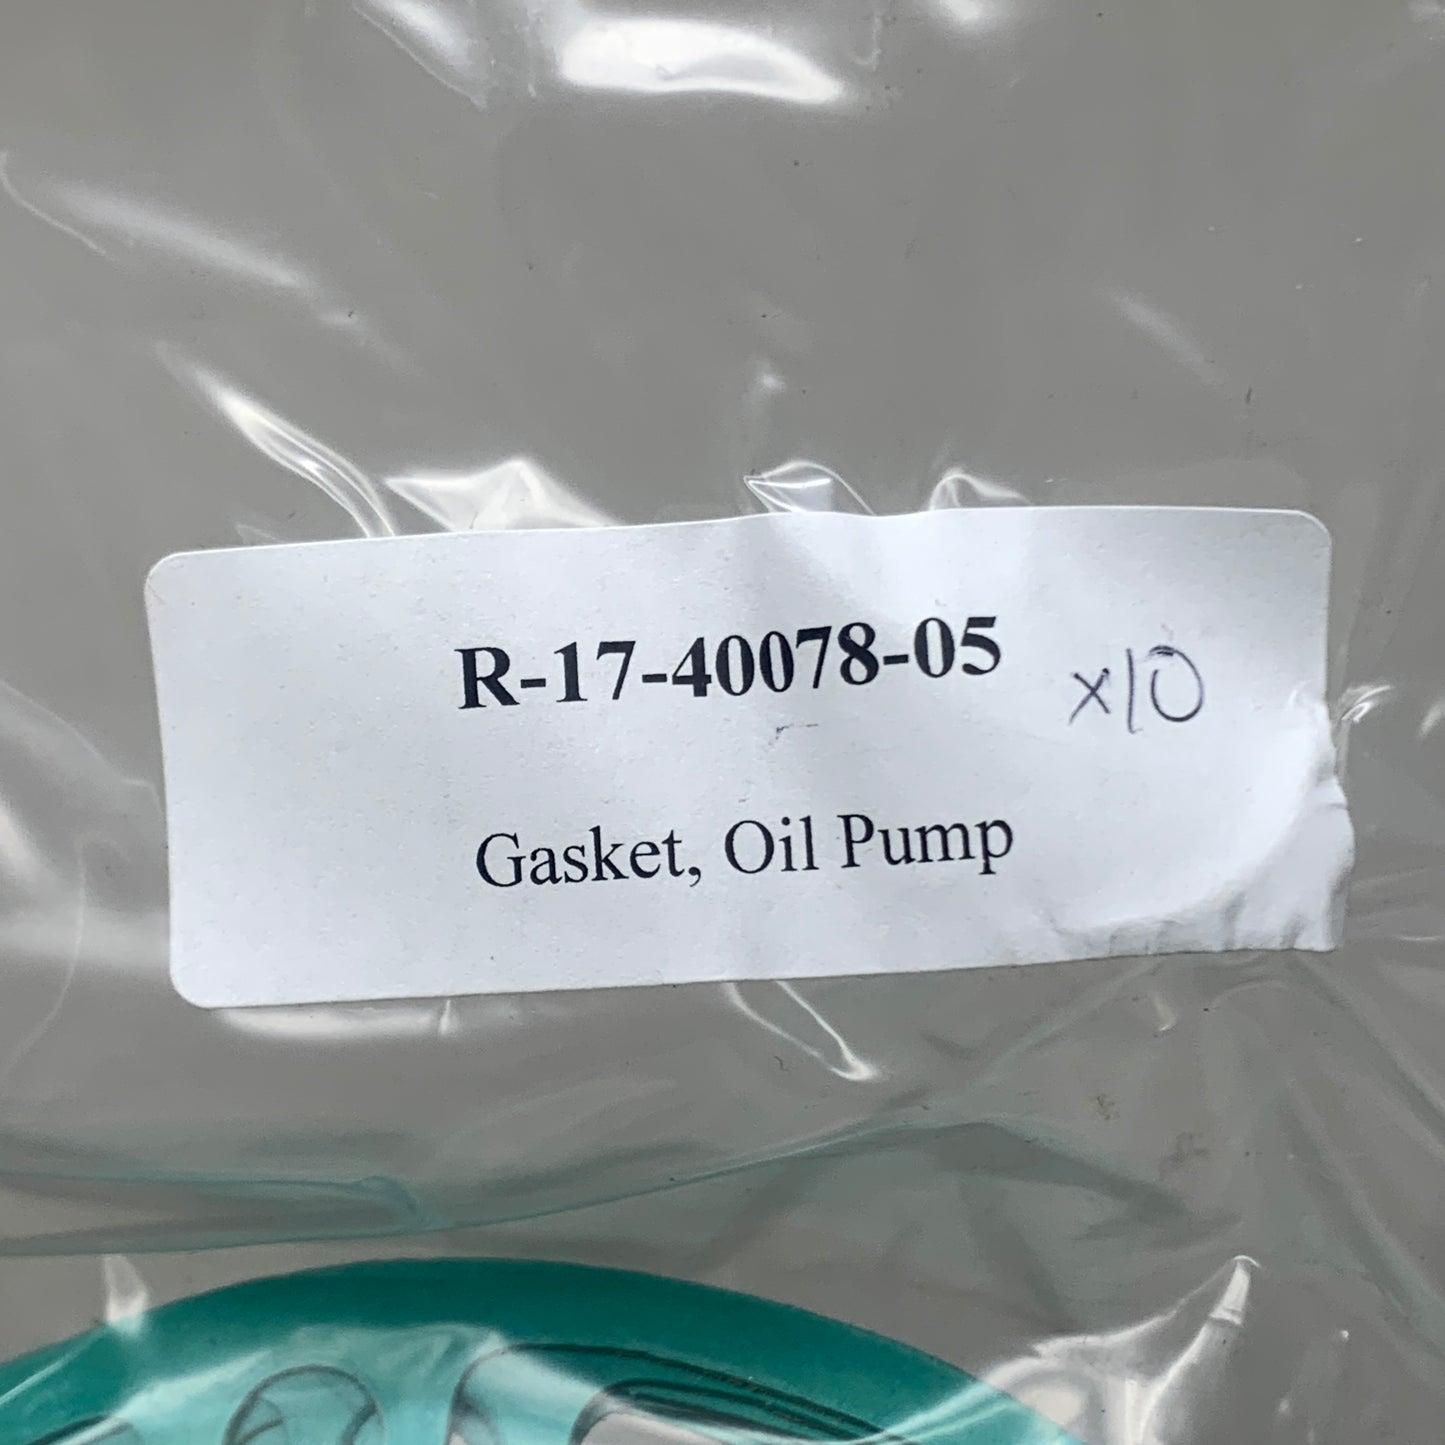 10PK PUMP OIL GASKET Compressor Parts R-17-40078-05